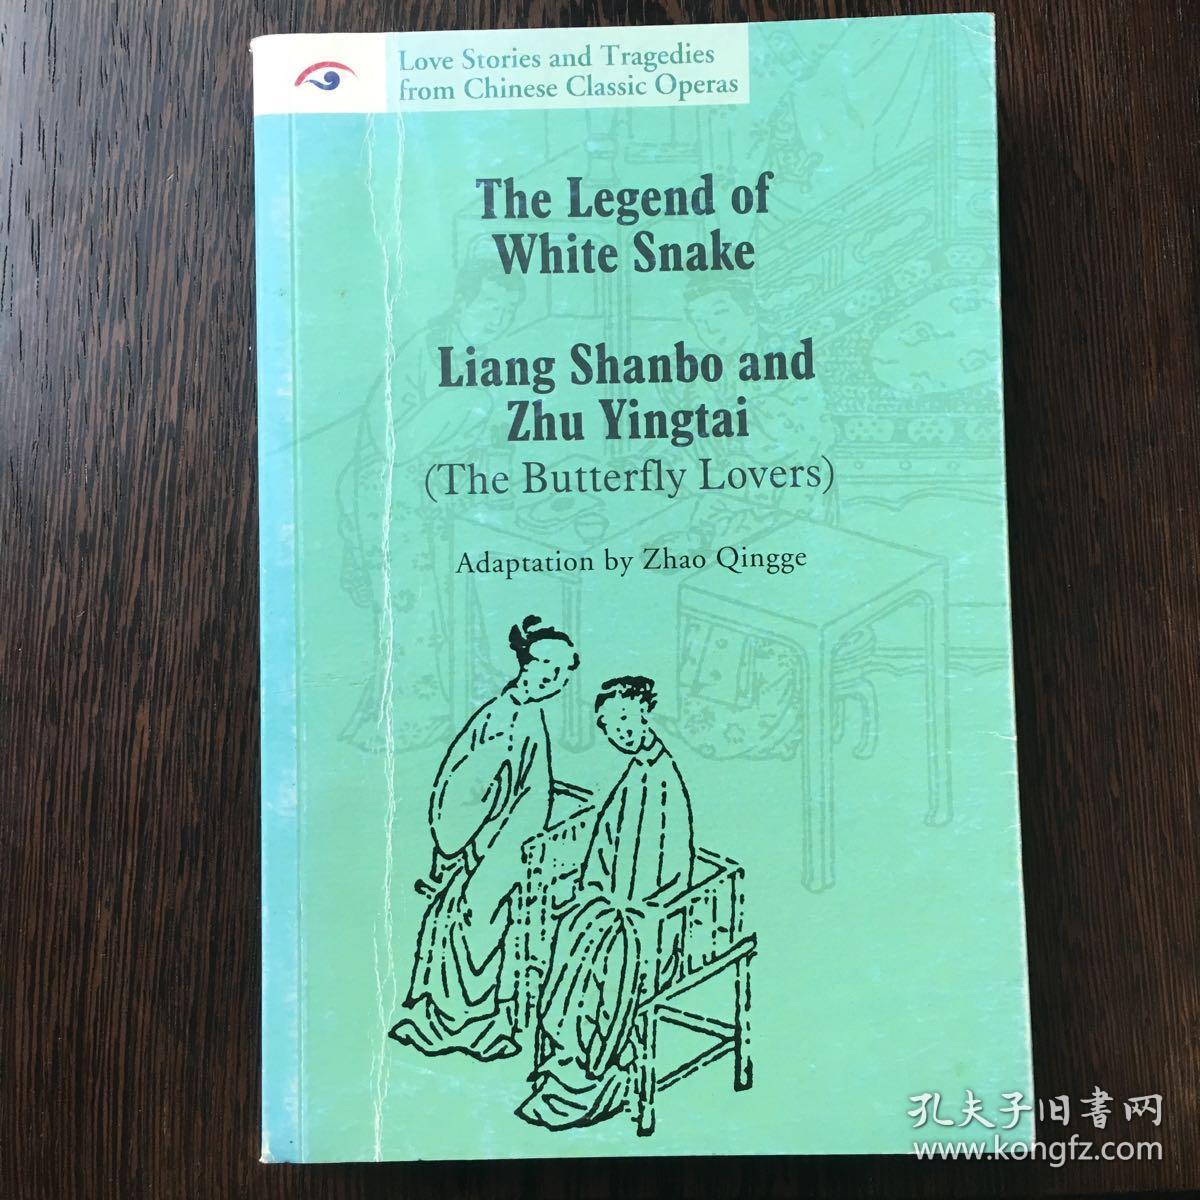 The legend of White Snake liang shanbo and zhu yingtai